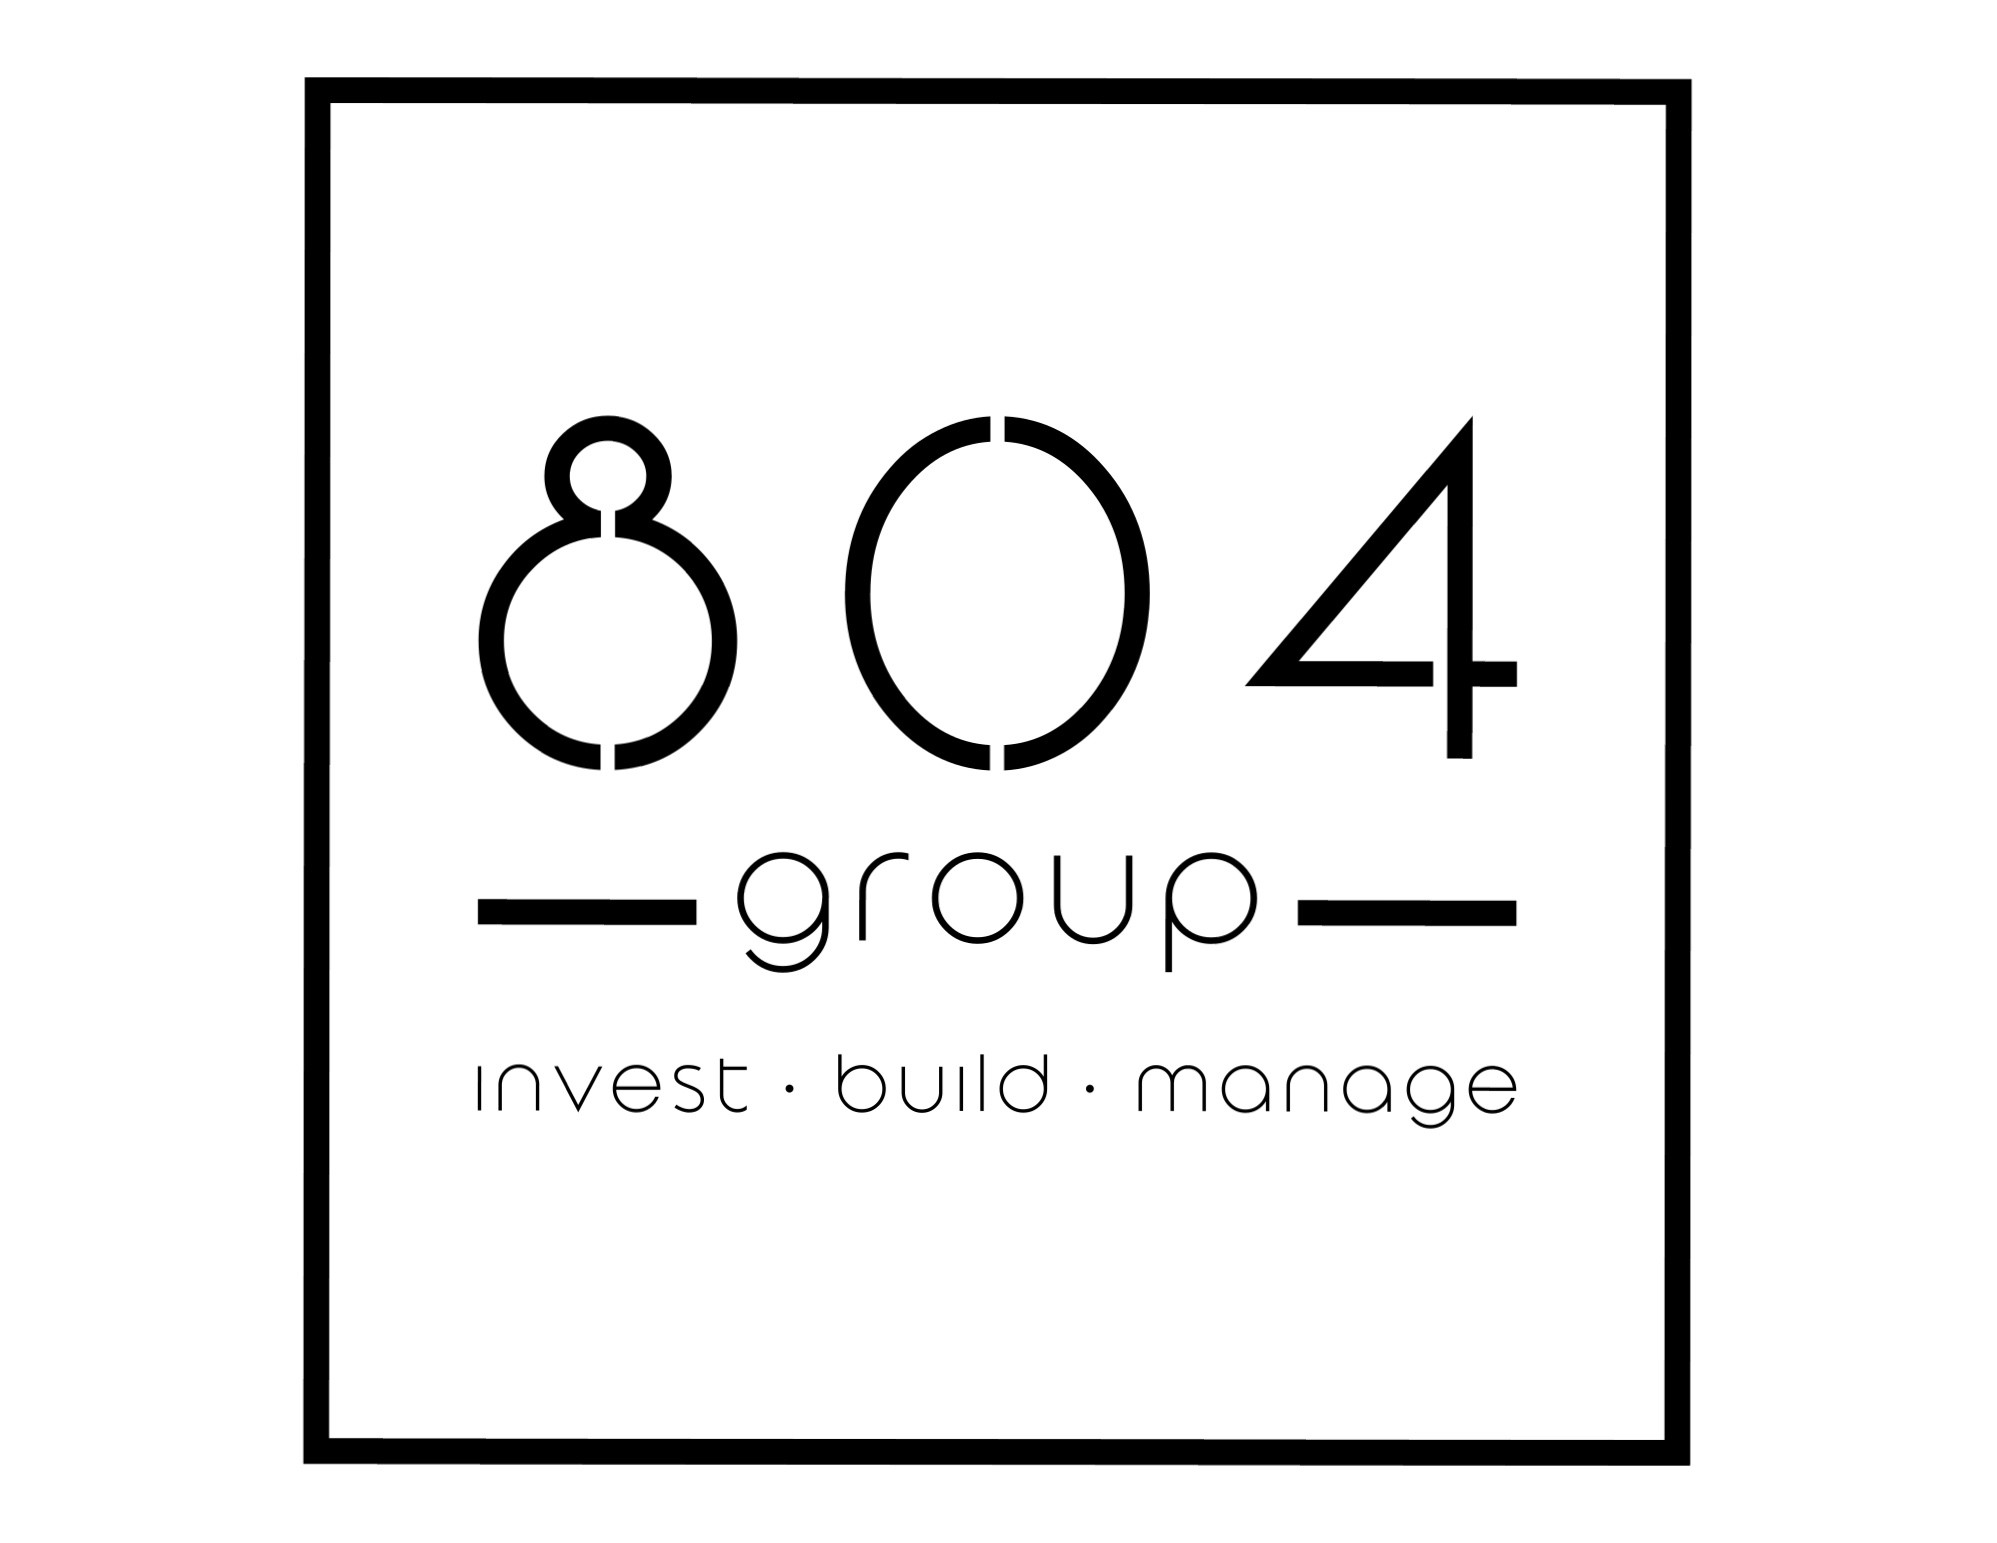 804 Group's logo